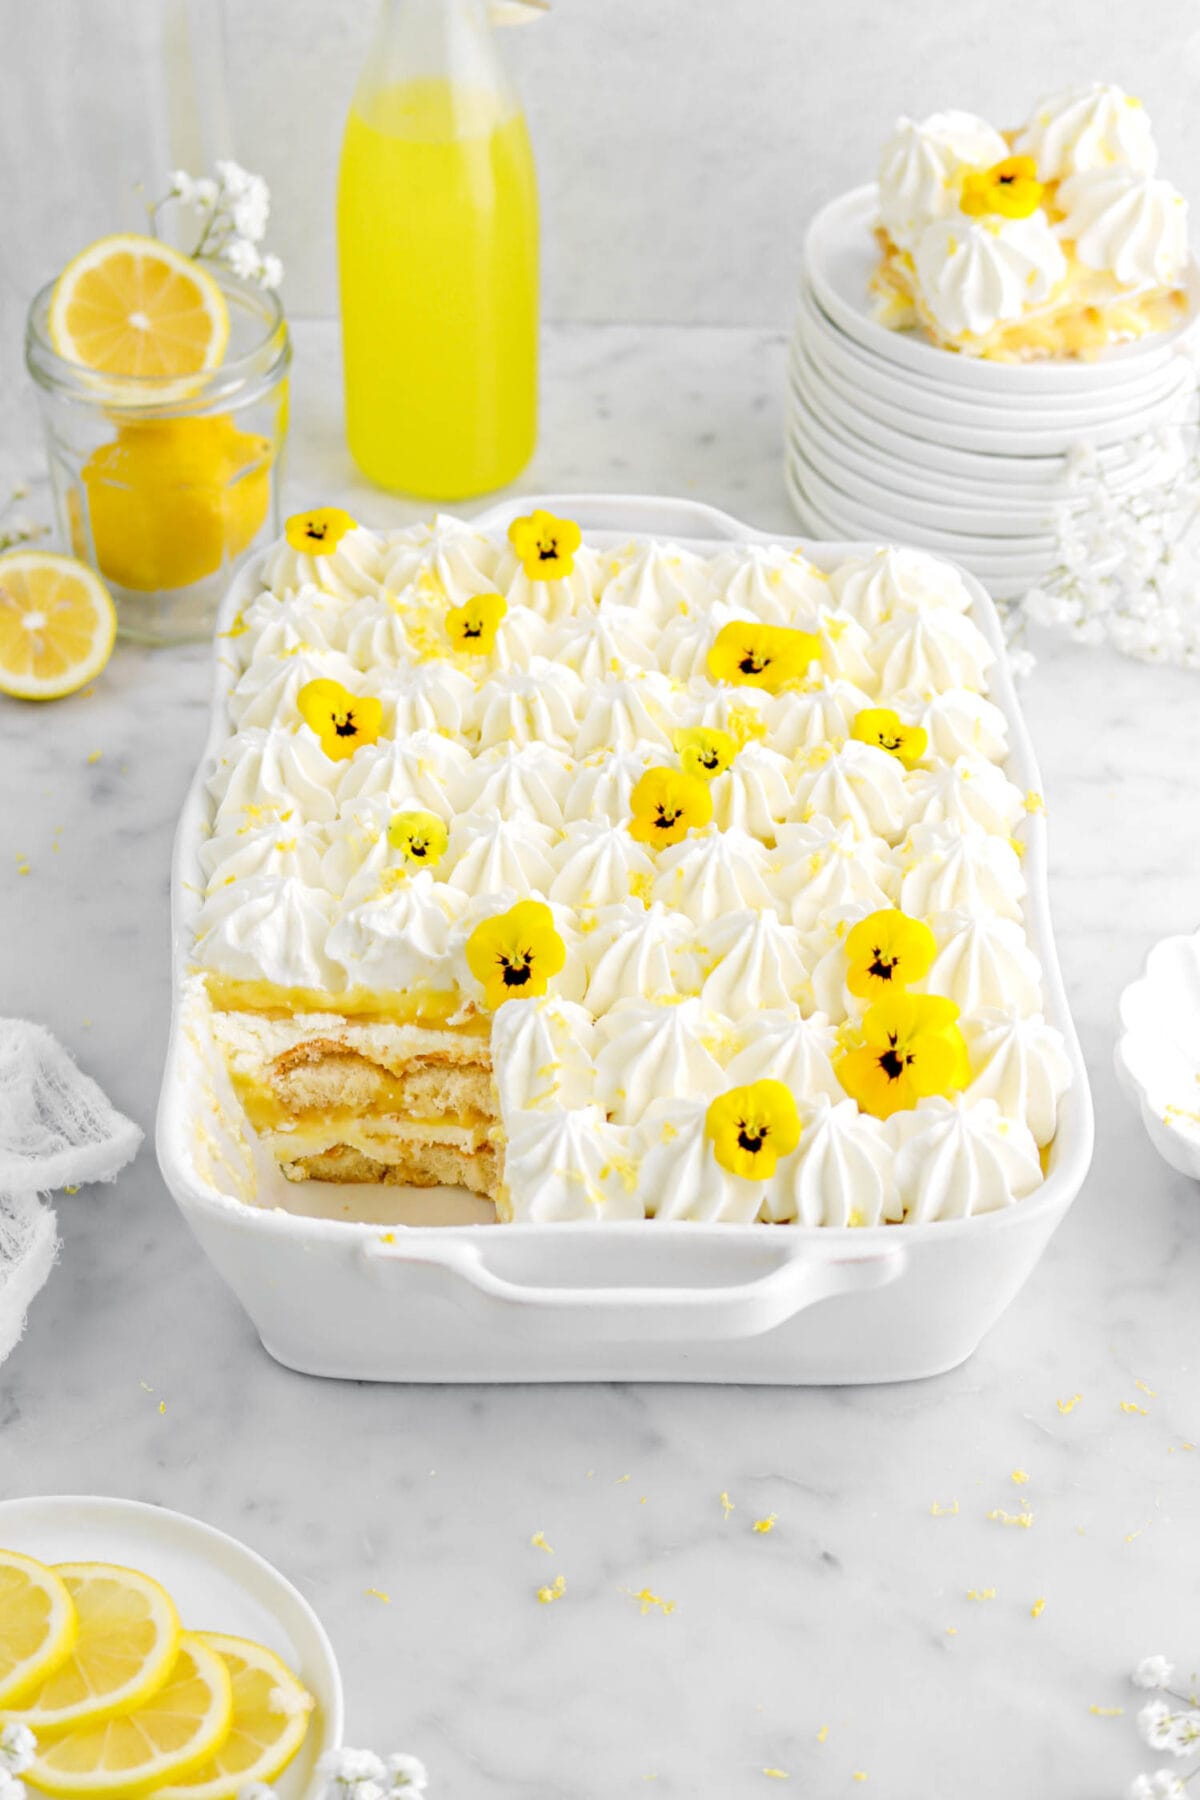 angled shot of lemon tiramisu with left corner missing a slice in white casserole with lemons and white flowers around, stack of white plates with slice tiramisu behind.